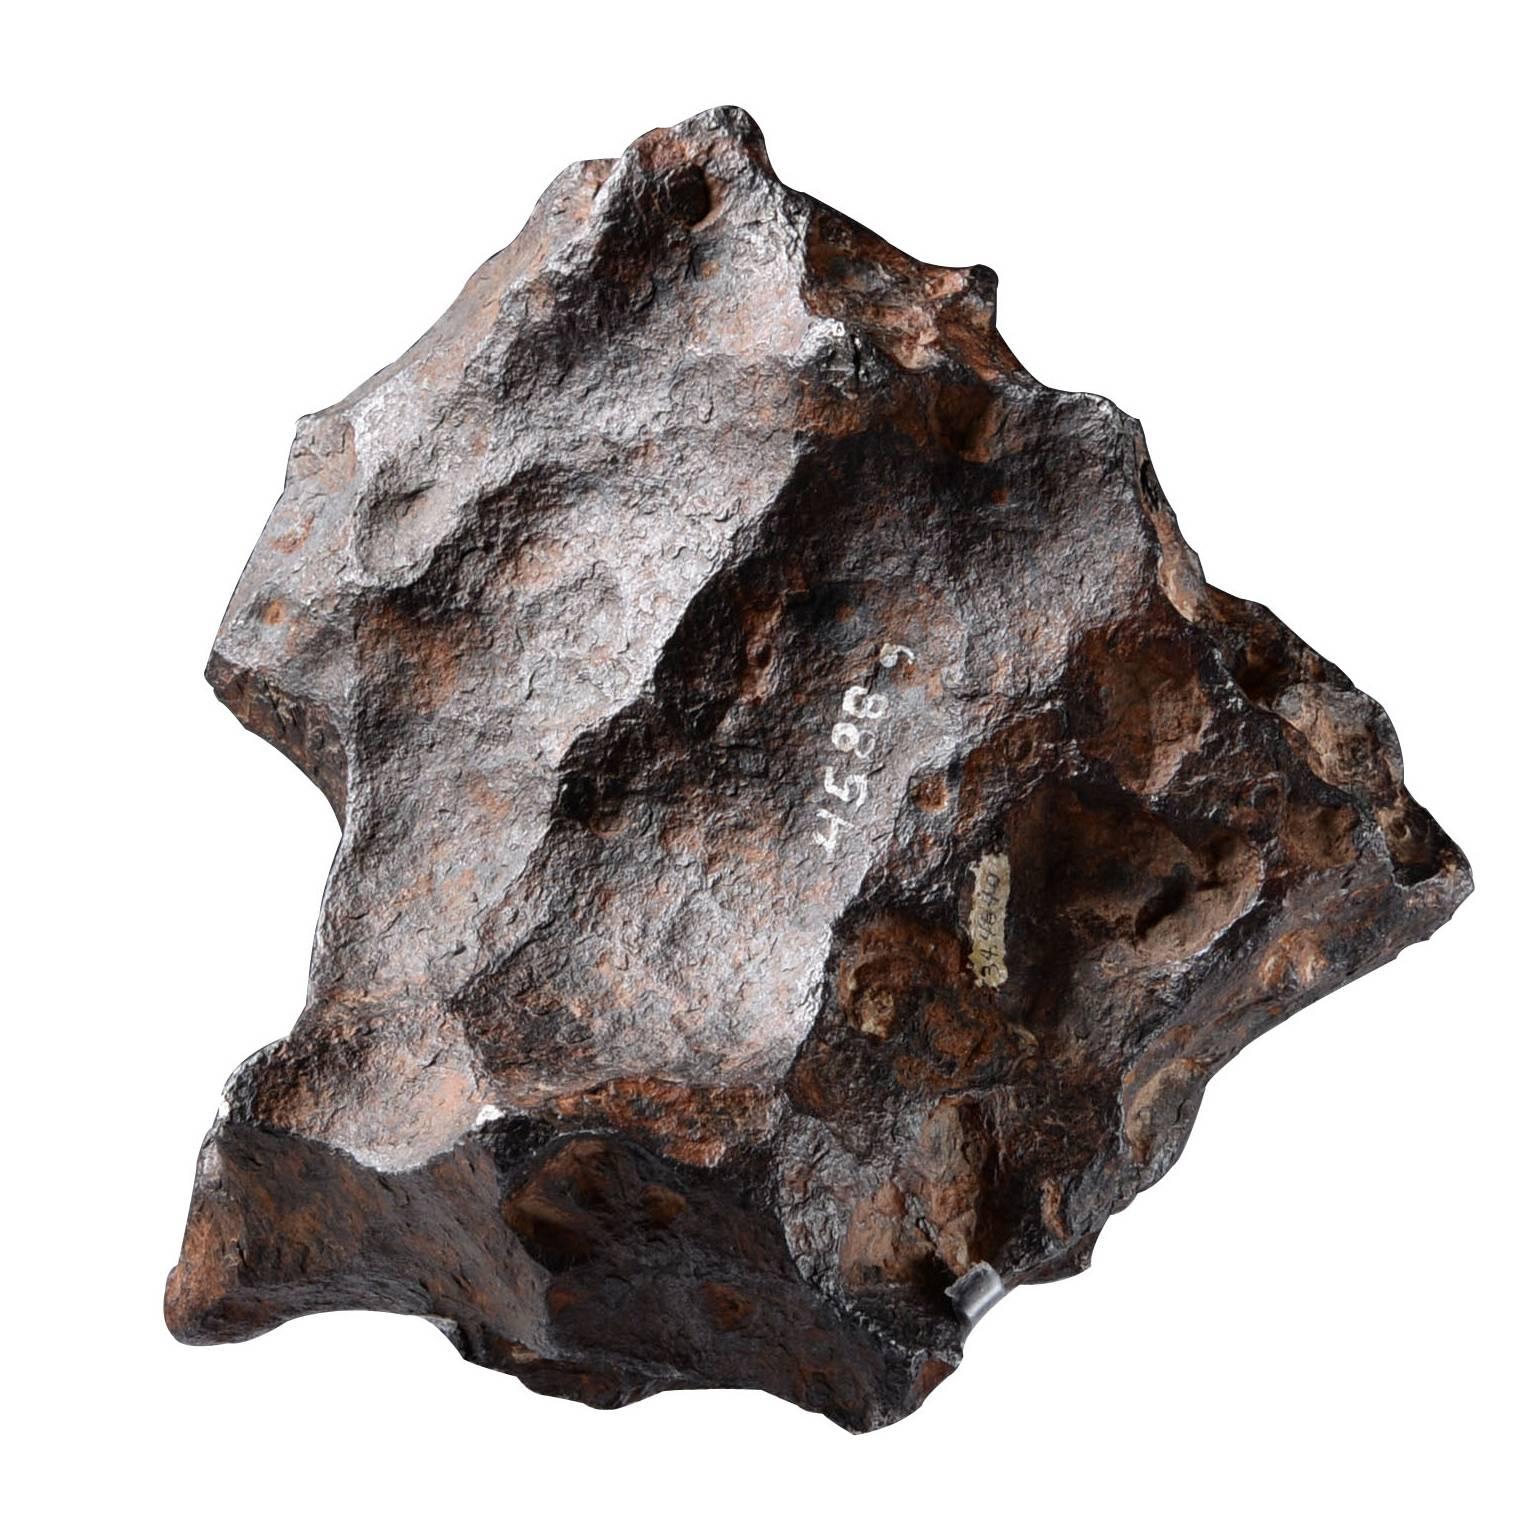 Superb Extra-Terrestrial Abstract Sculpture, Iron Meteorite